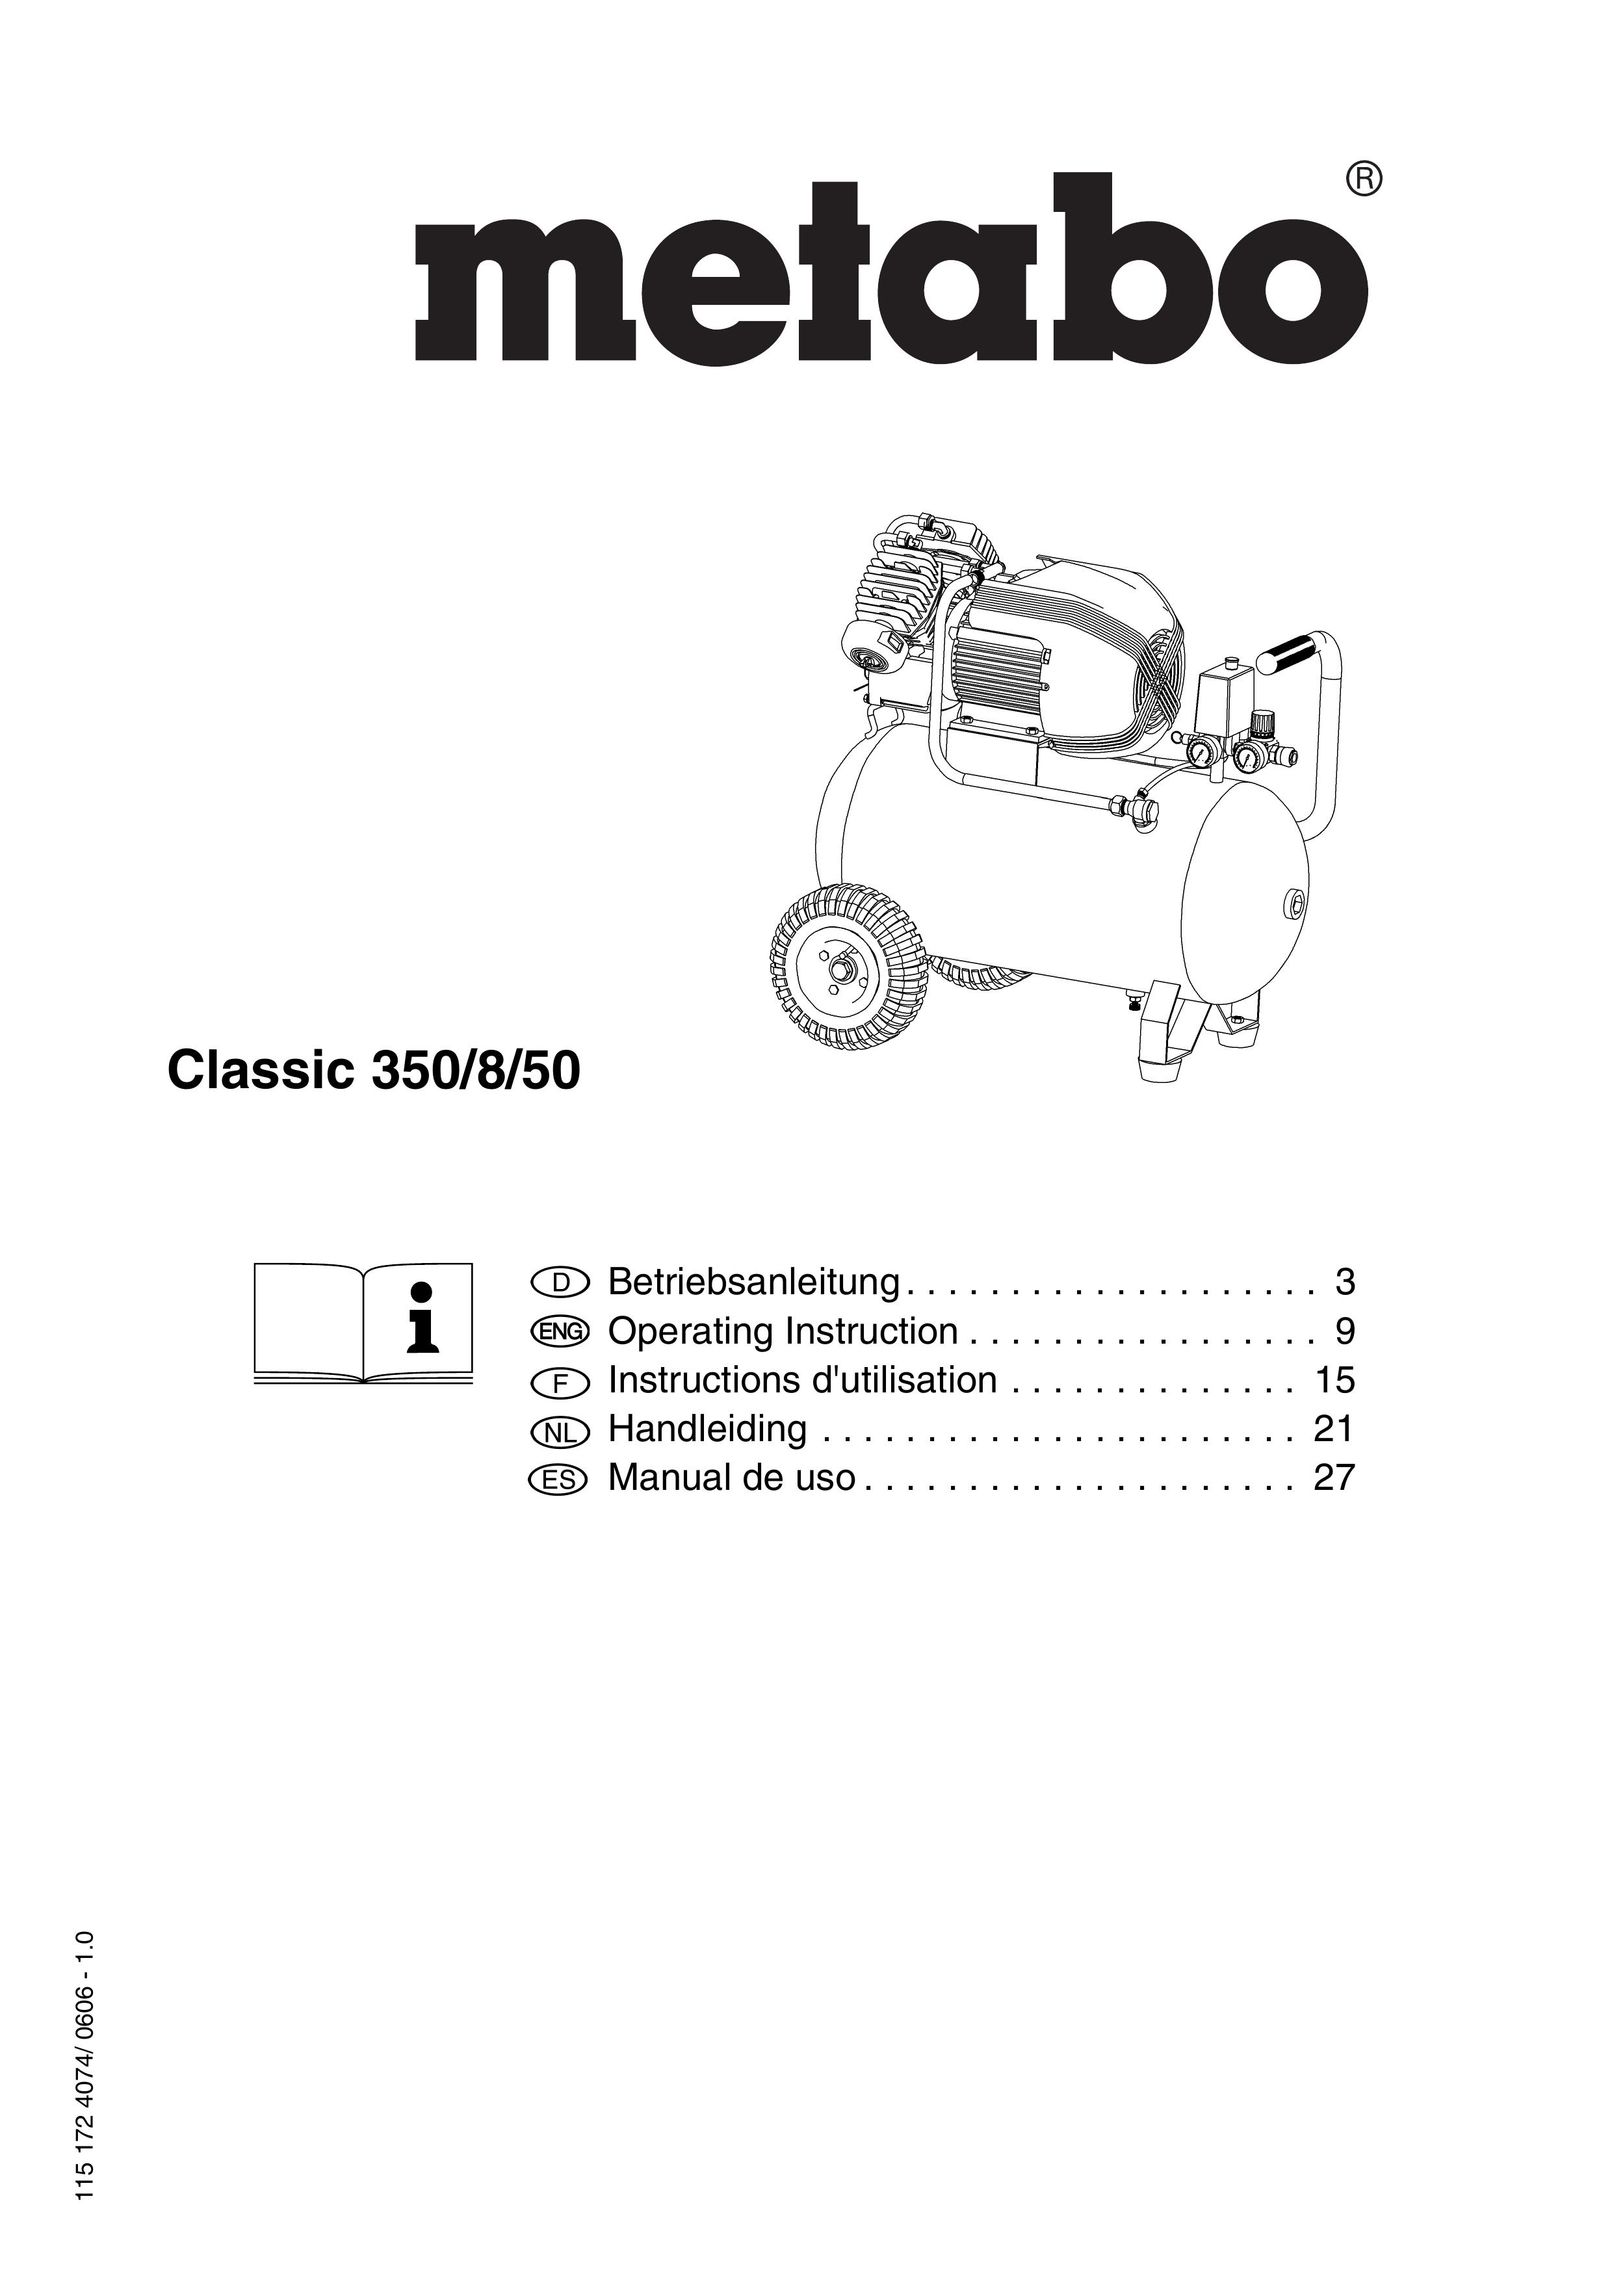 Metabo Classic 350 Air Compressor User Manual